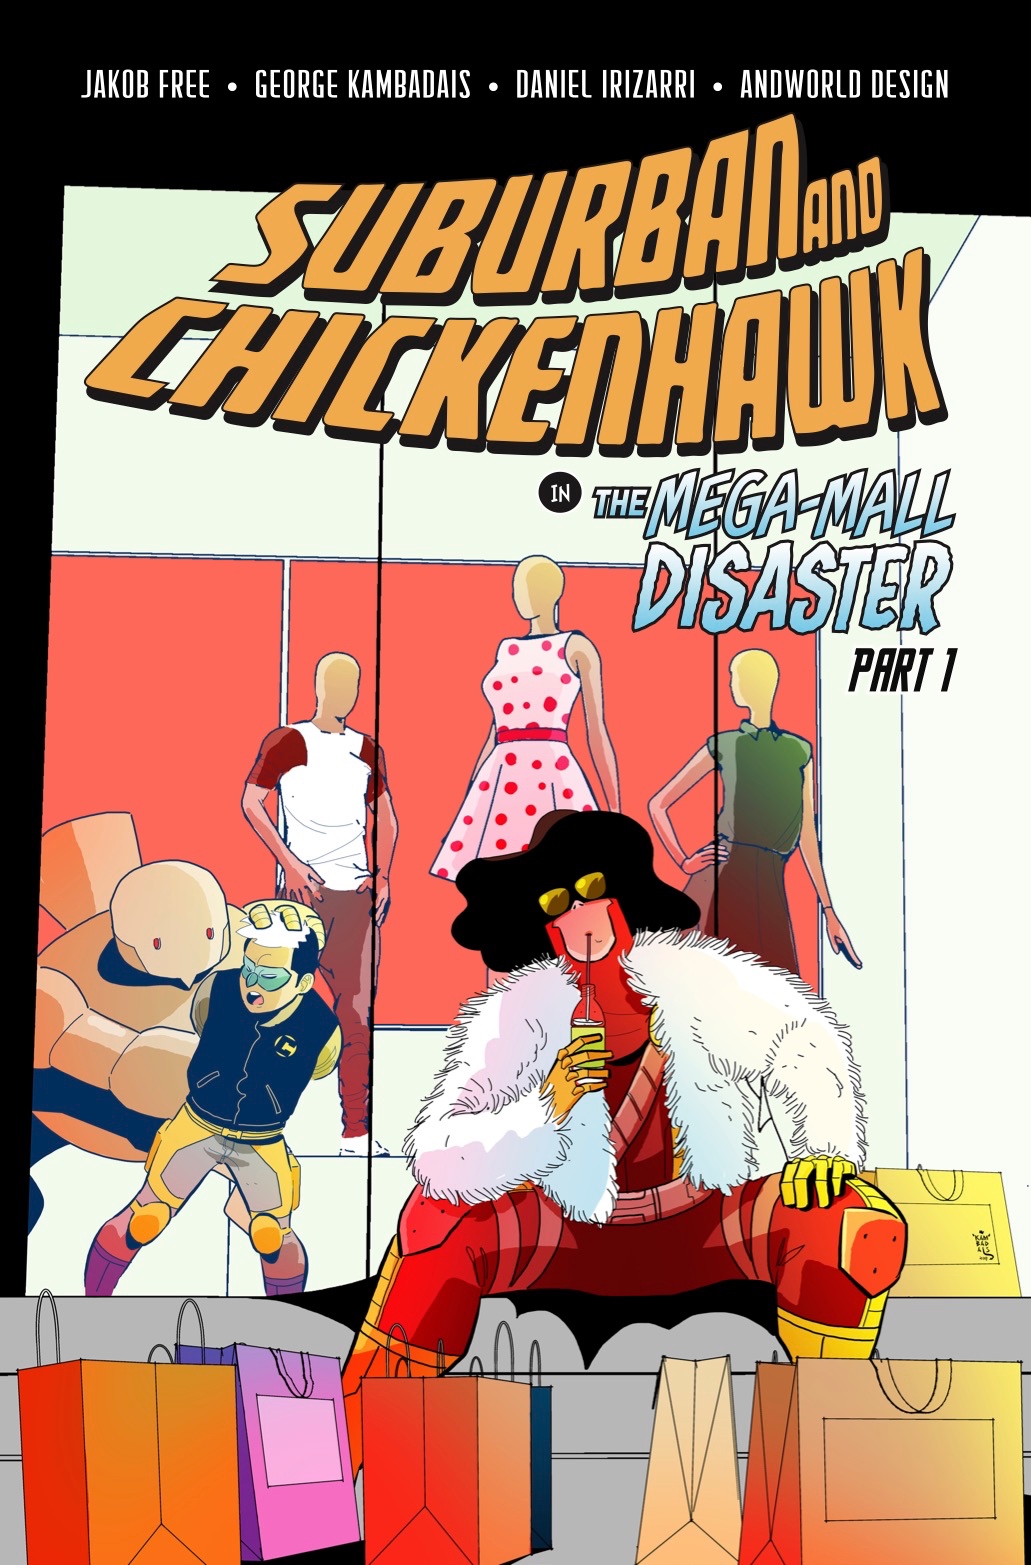 Suburban &amp; Chickenhawk: The Mega-Mall Disaster #1